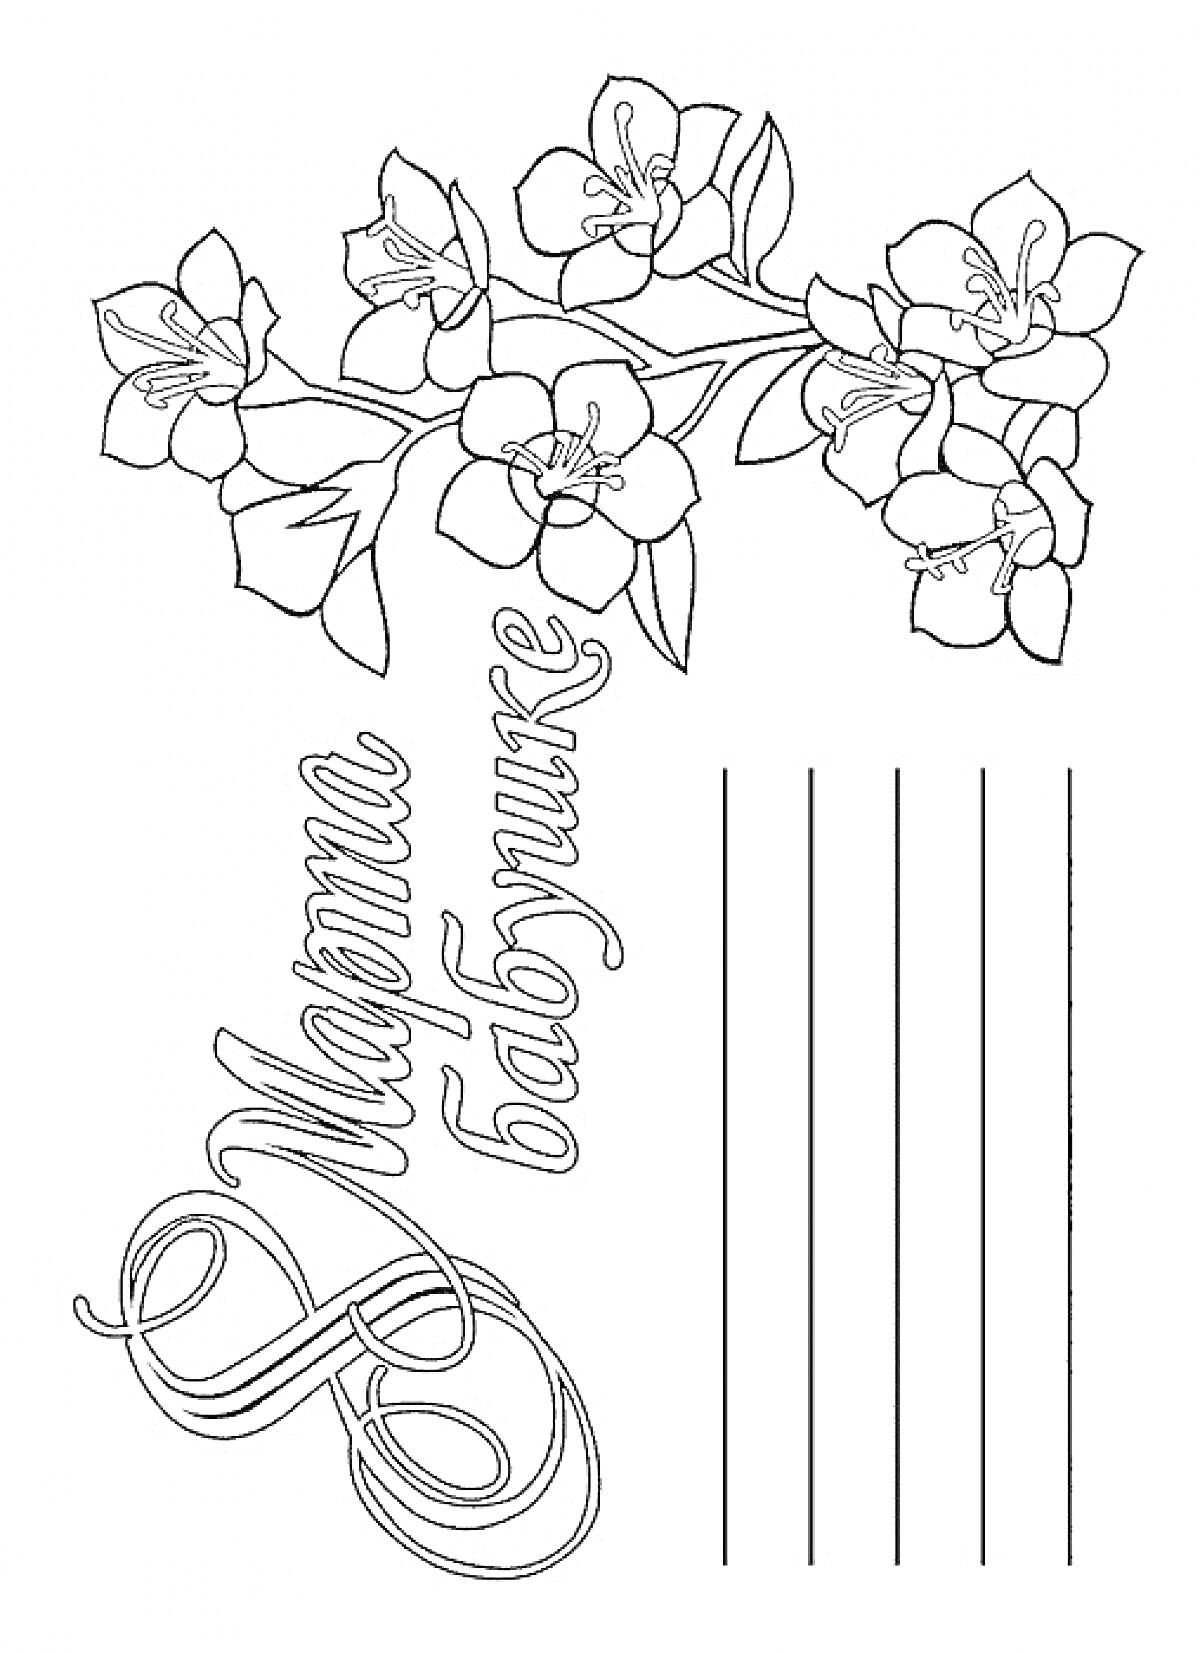 Раскраска Открытка на 8 Марта для бабушки с веткой цветущей сакуры